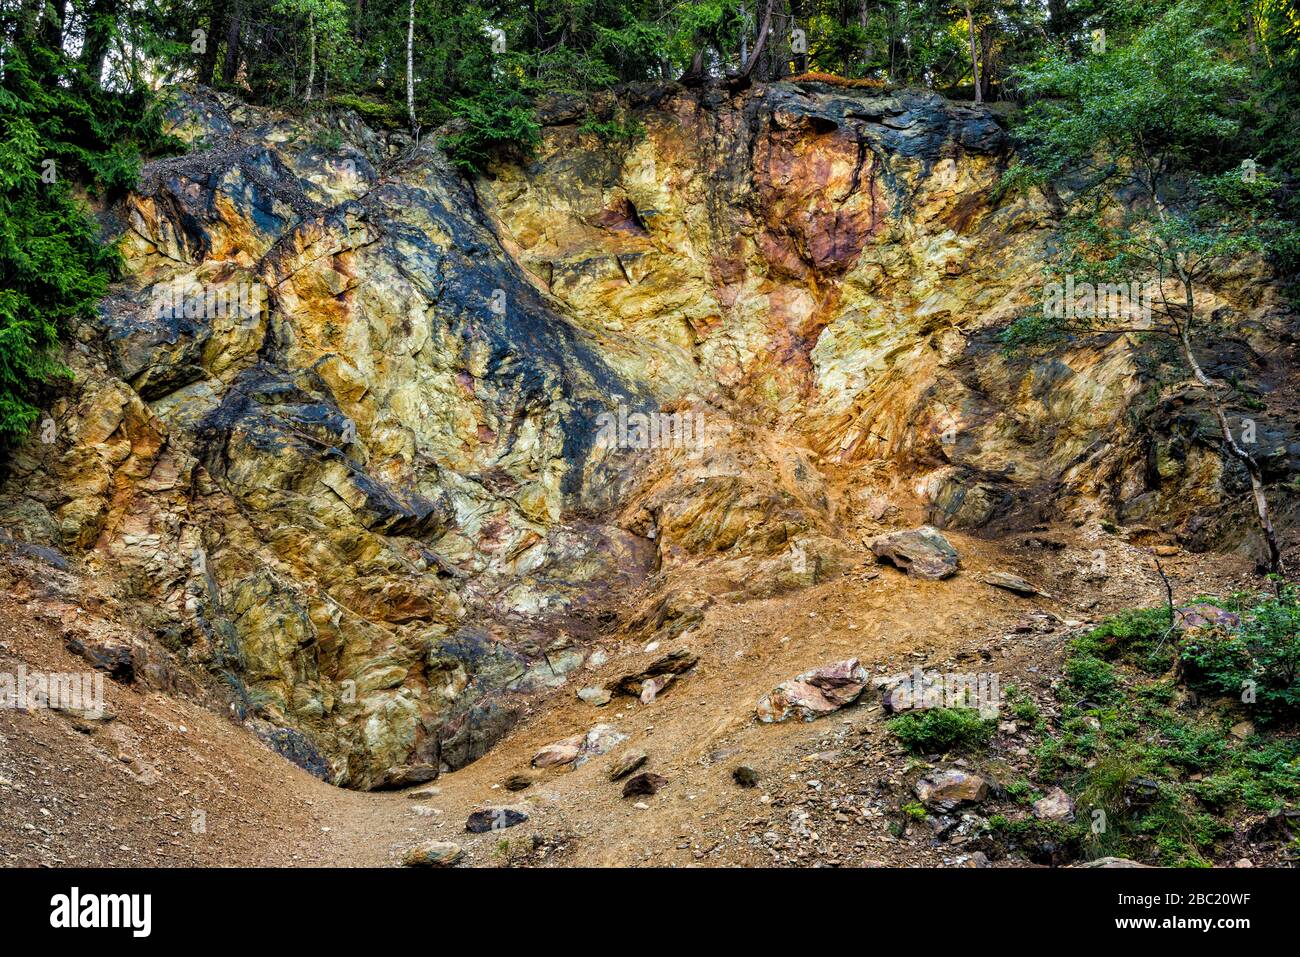 Granite rocks at Colourful Lakelets (Kolorowe Jeziorka), former pyrite mining area in Rudawy Janowickie mountain range, Lower Silesia, Poland Stock Photo